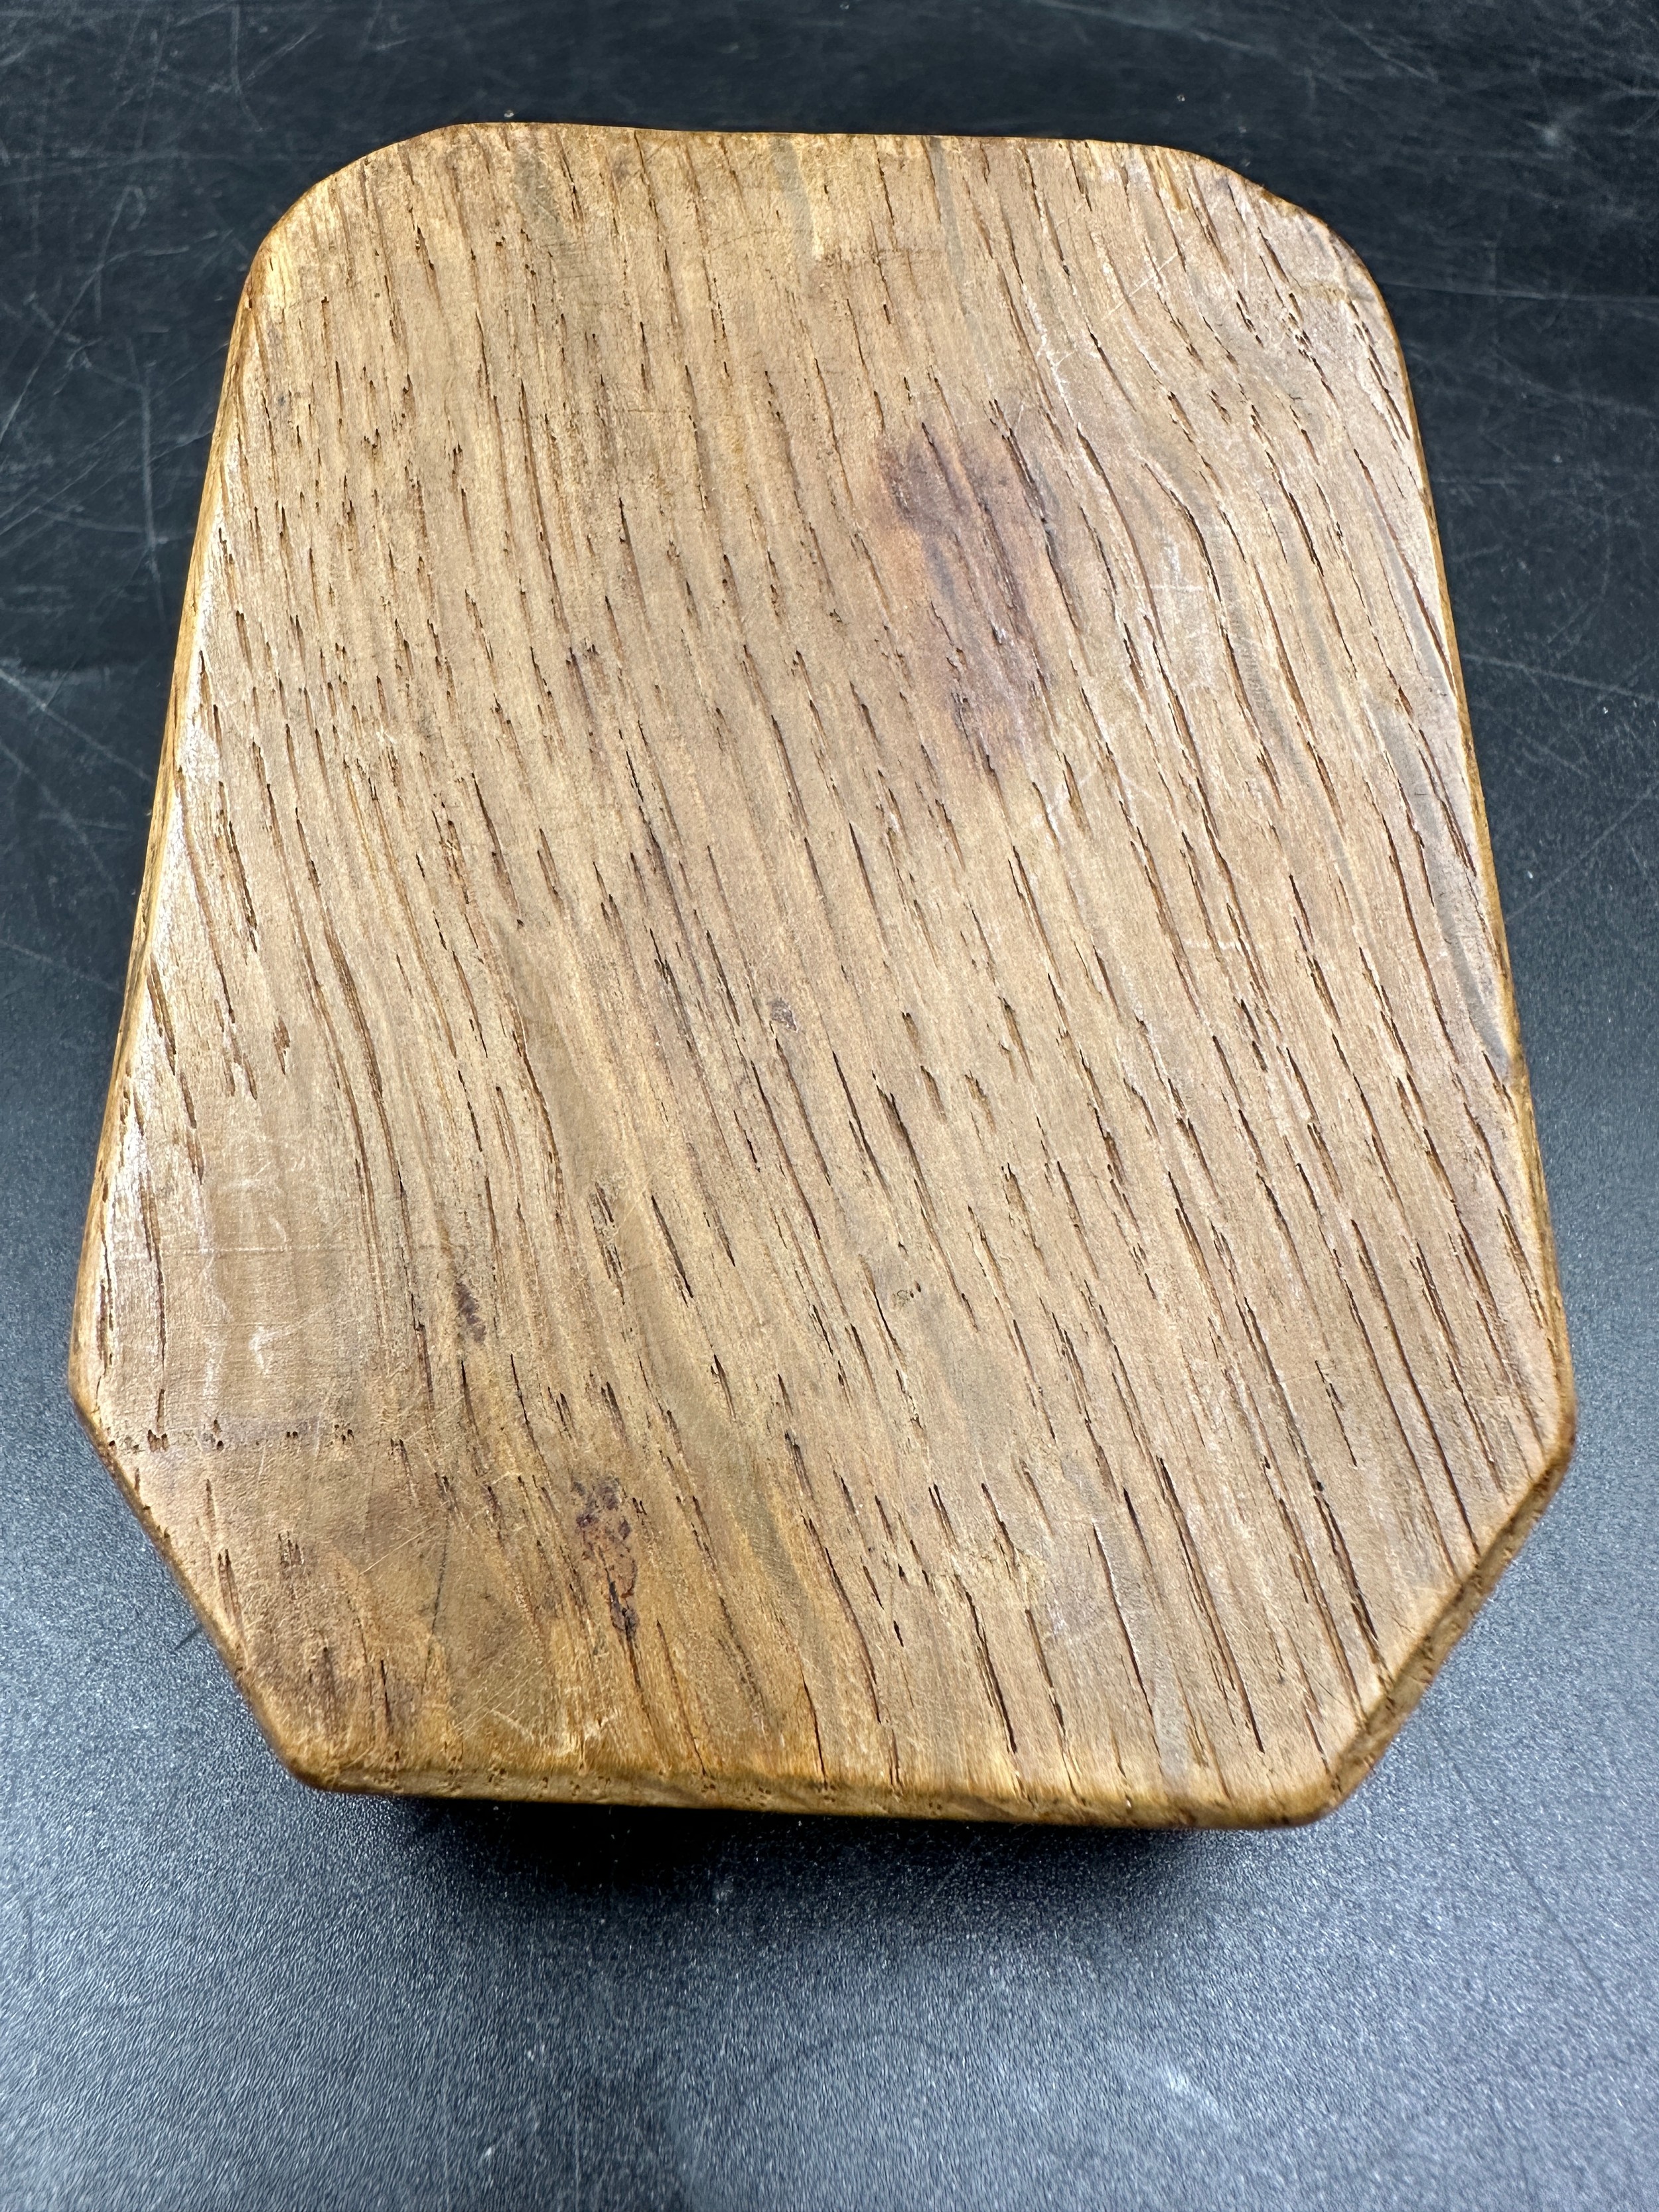 Robert Thompson 'Mouseman' Oak ashtray, tail to right 10cm x 7.5cm. - Image 3 of 3